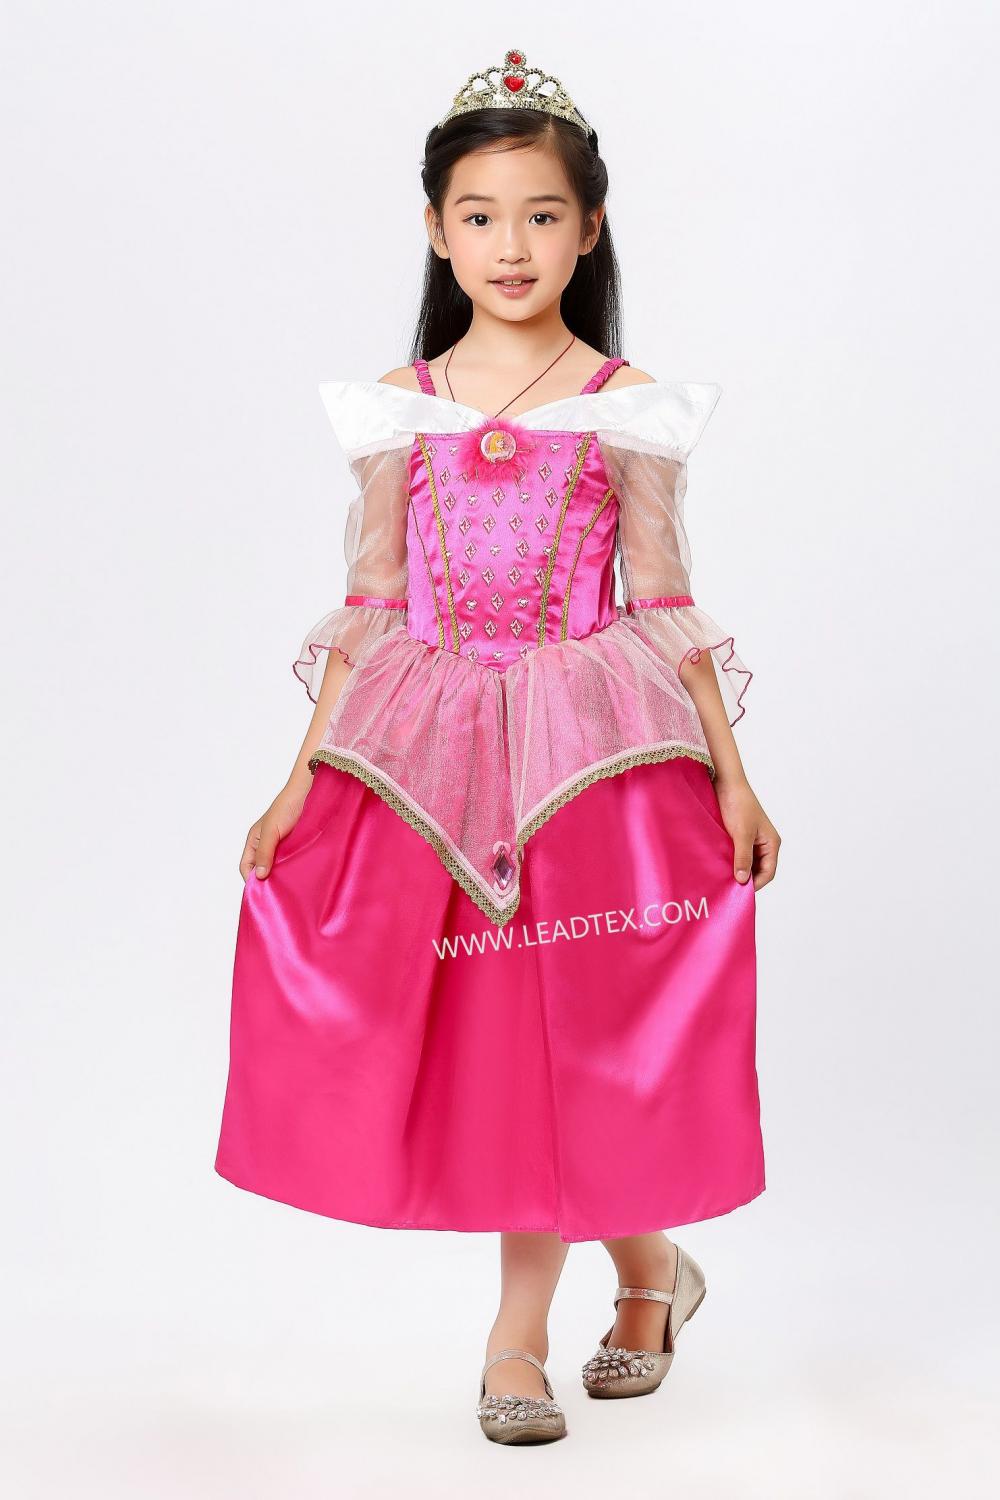 princess costumes